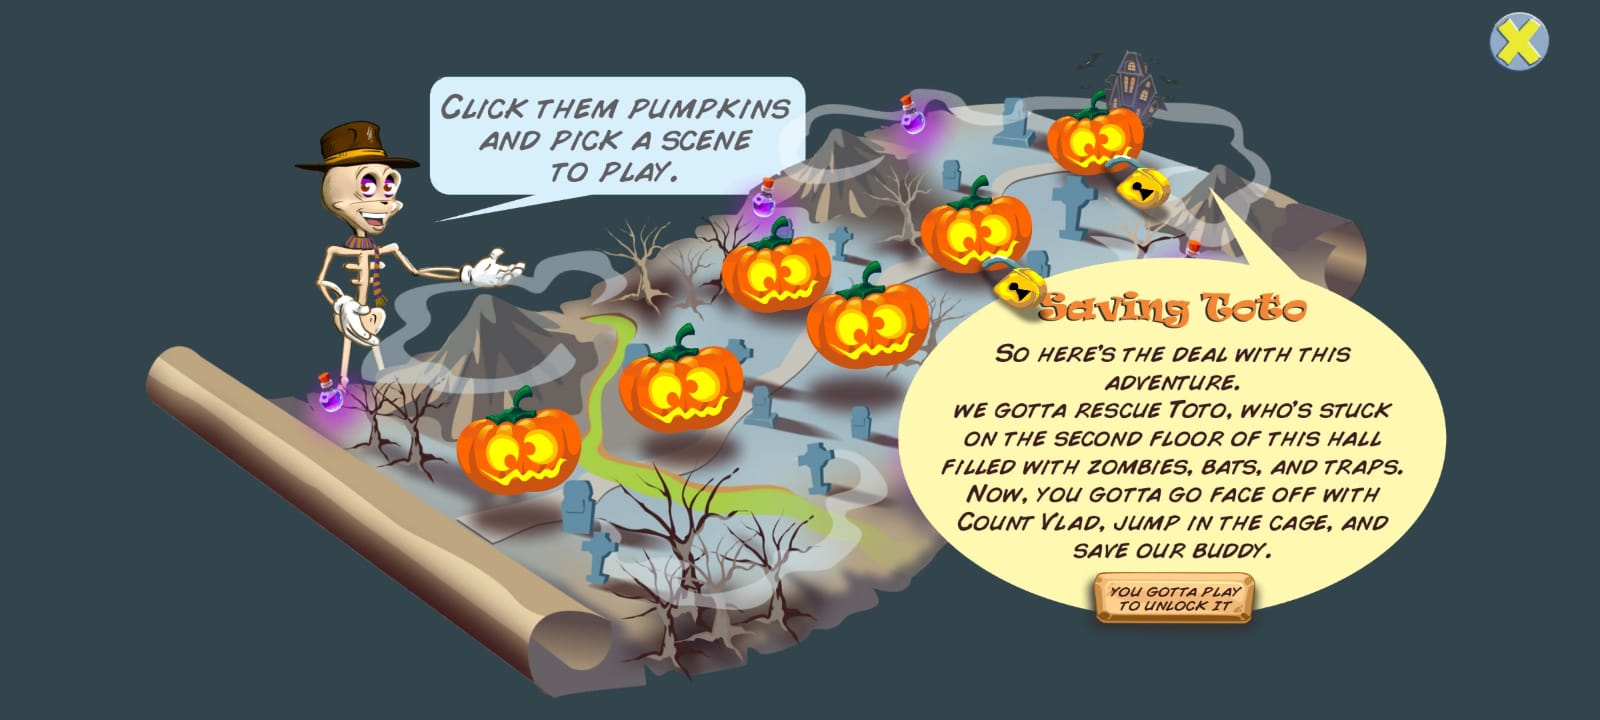 Descargar Pumpkins Quest gratis para Android.